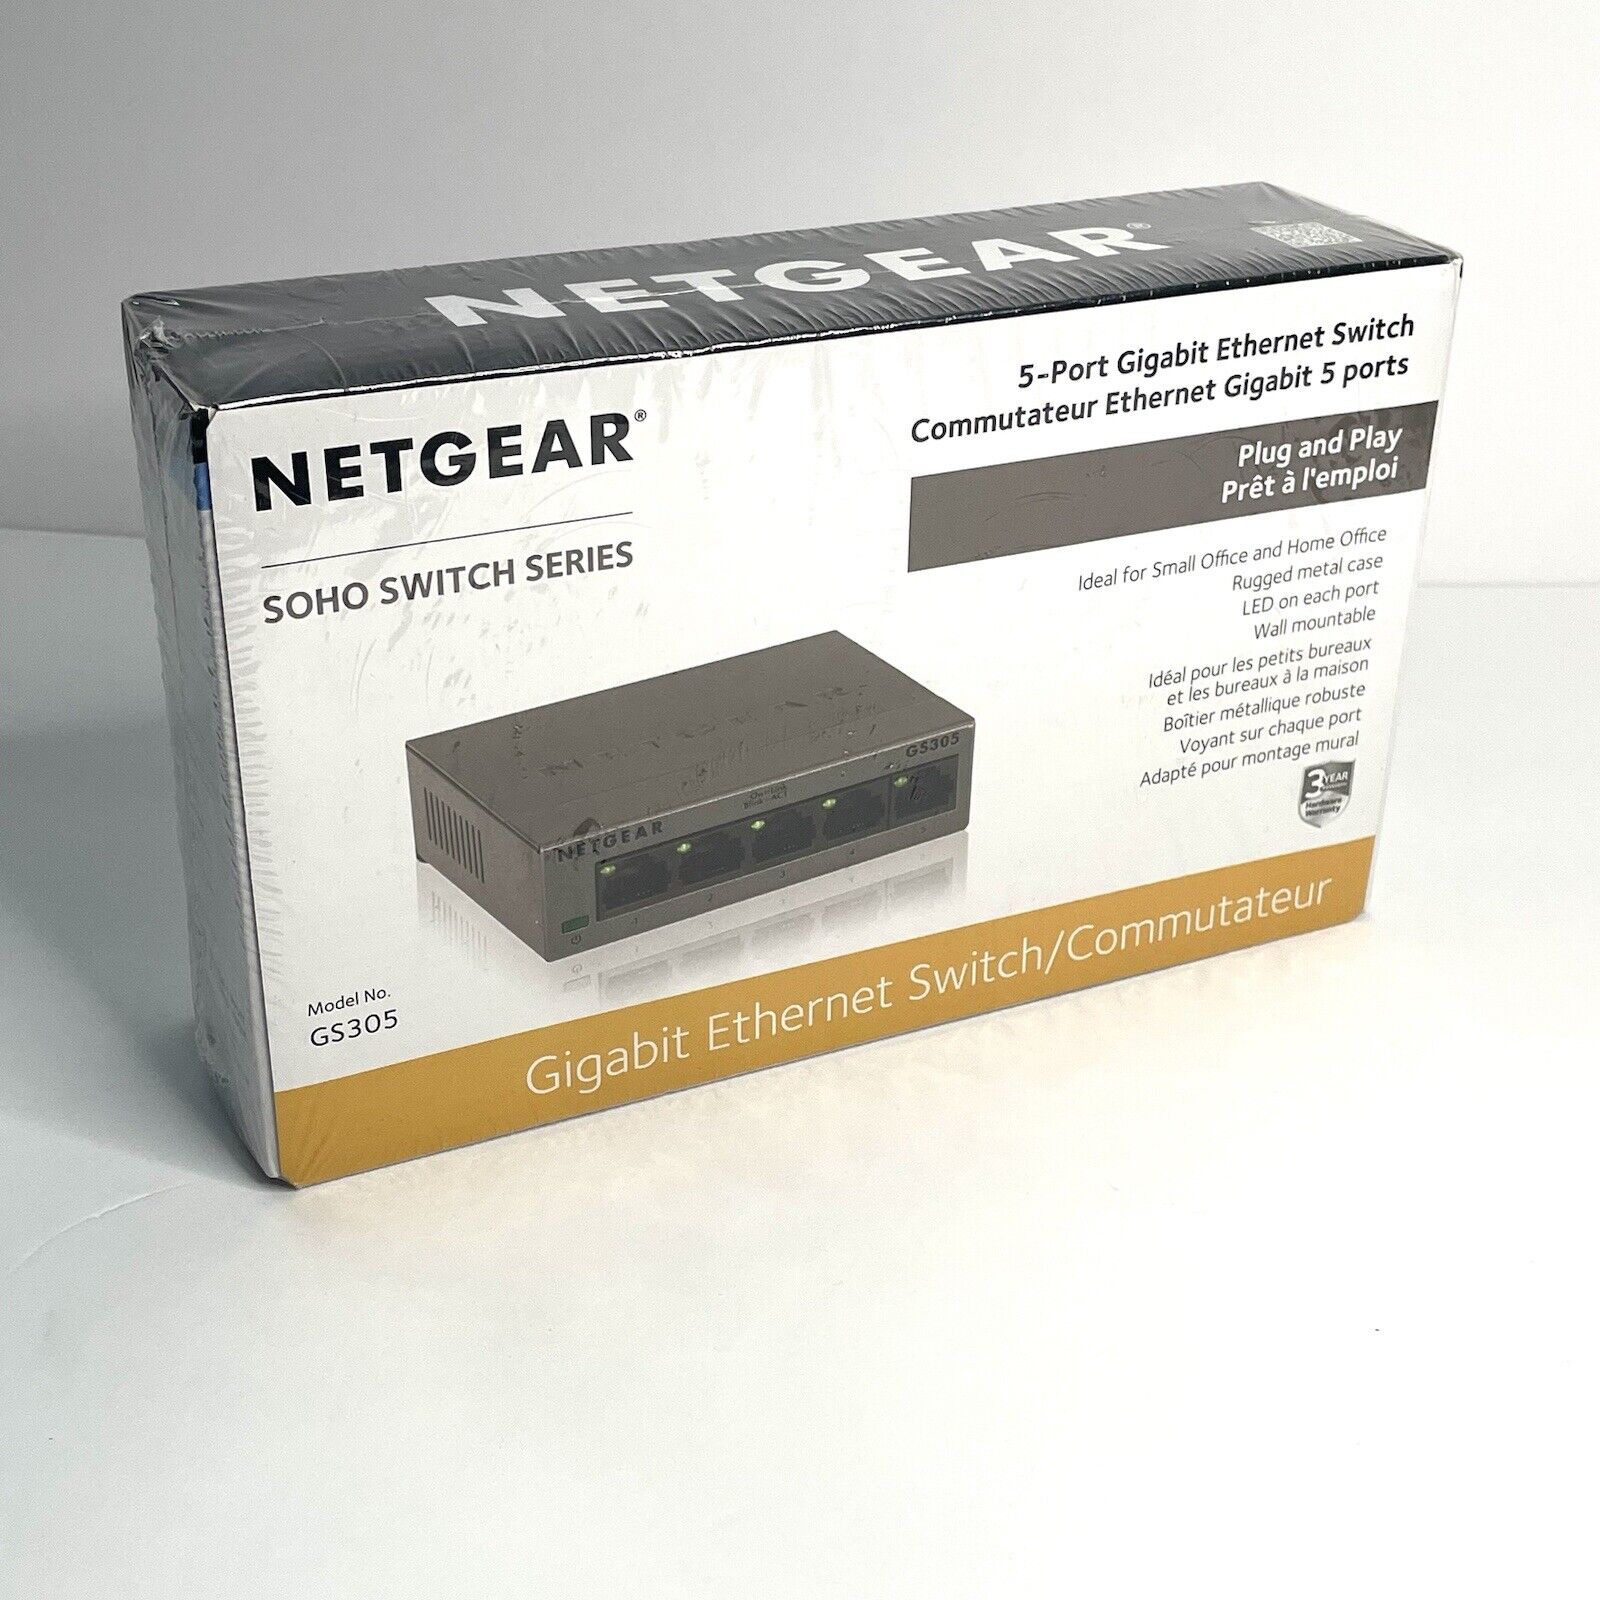 Netgear GS305 SOHO Switch Series, 5-Port Gigabit Ethernet Switch, New And Sealed